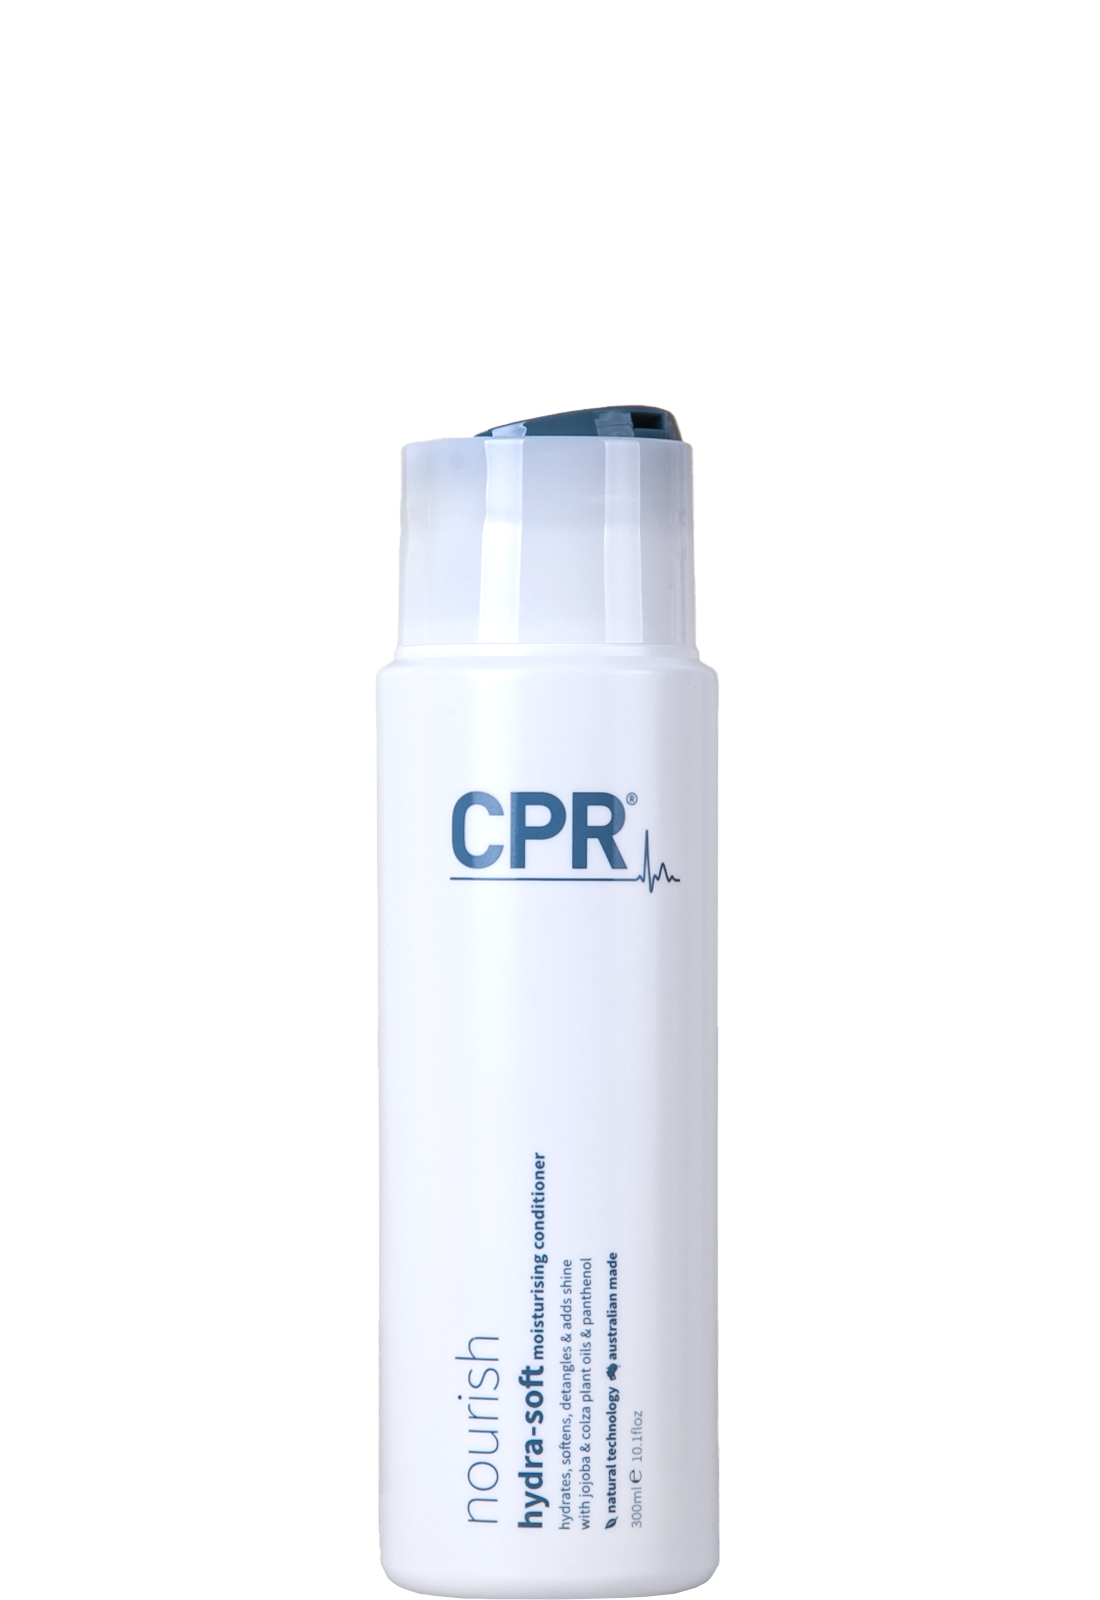 CPR Nourish Hydra-Soft Shampoo & Conditioner Duo 300ml